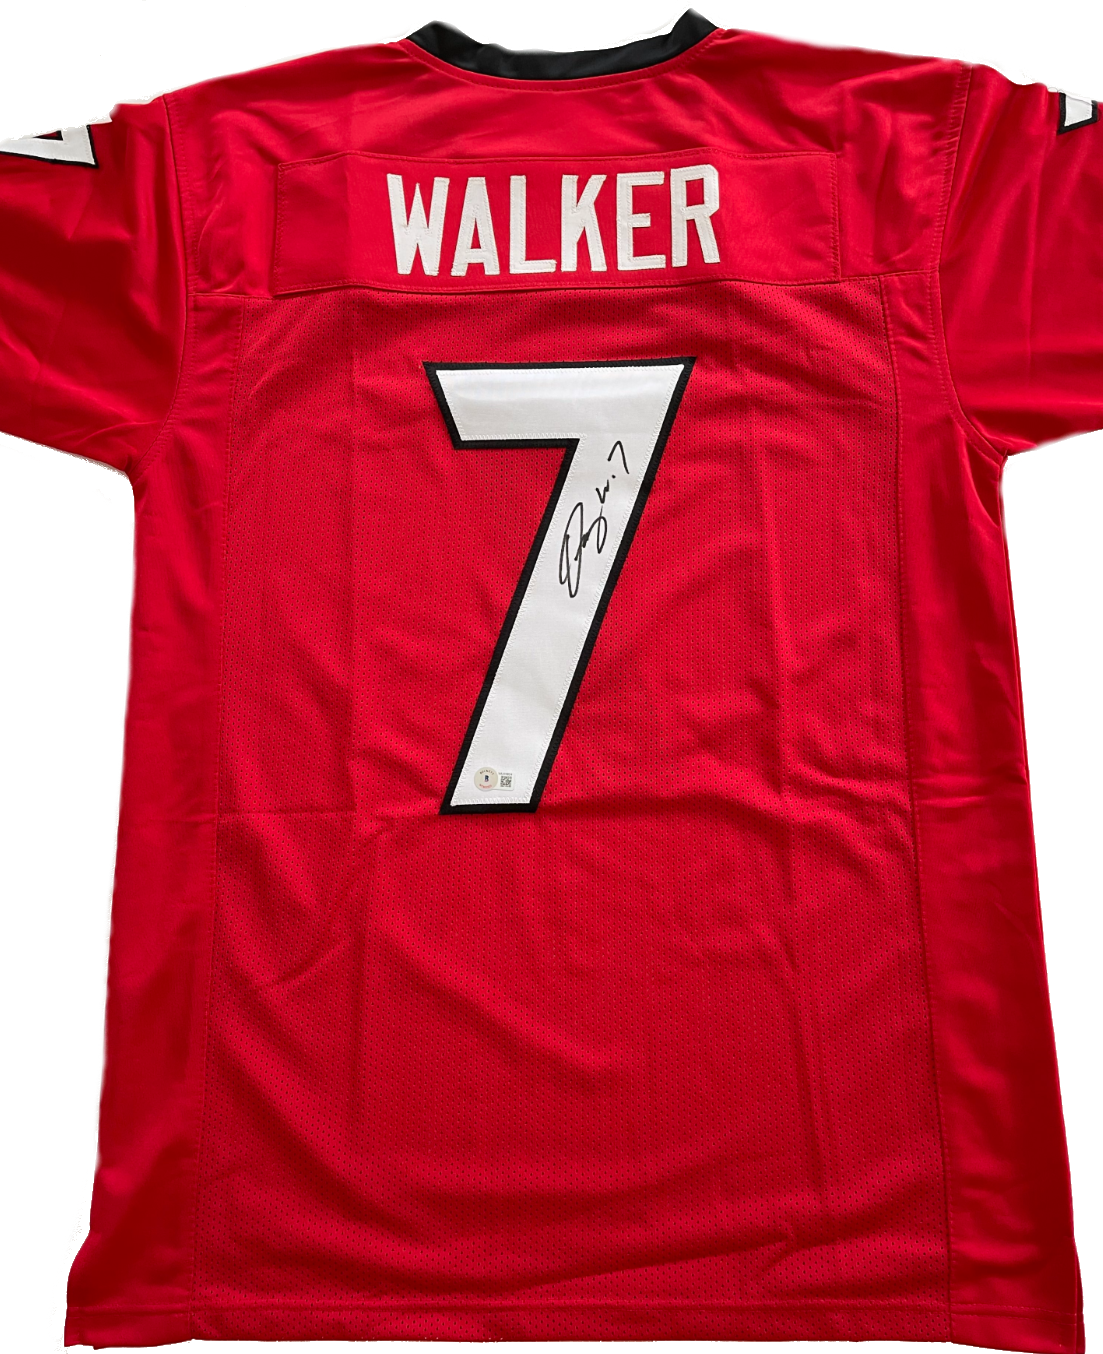 Quay Walker Georgia Custom Signed Jersey